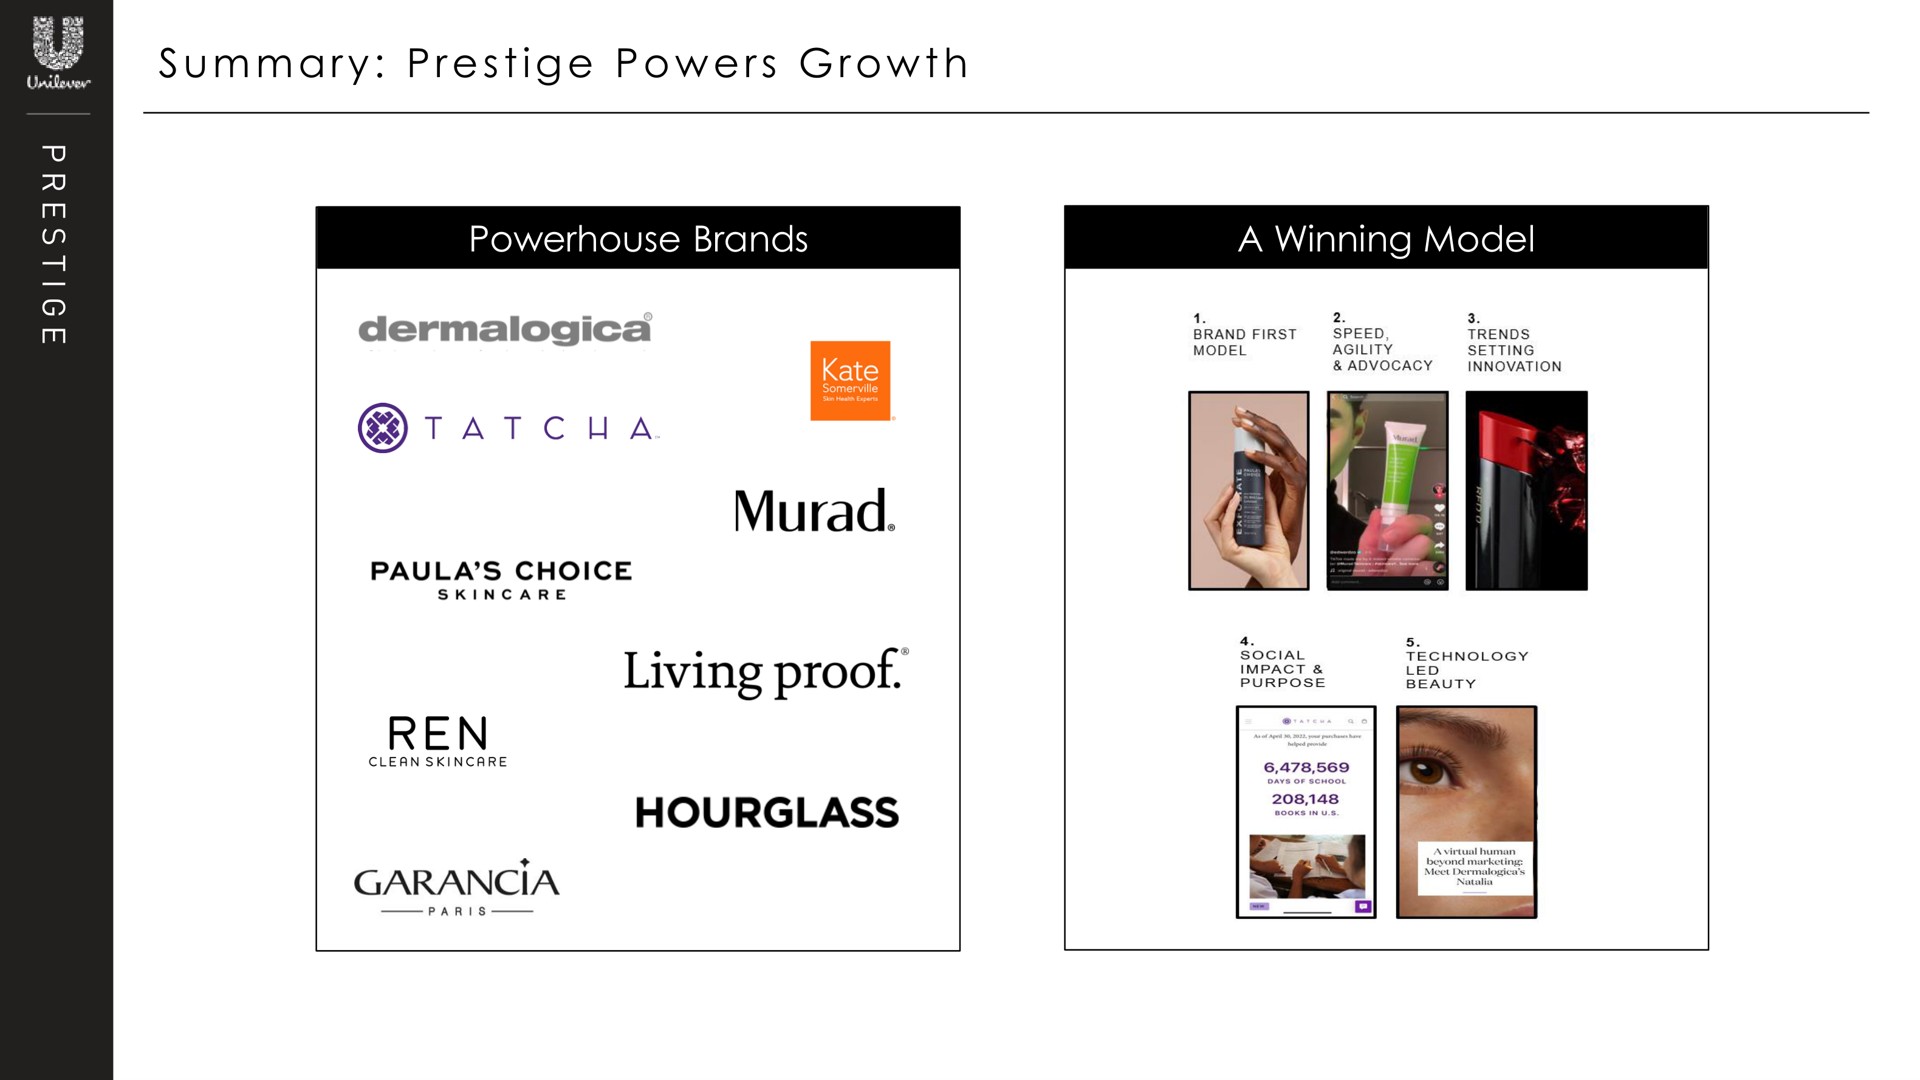 a i summary prestige powers growth living proof | Unilever